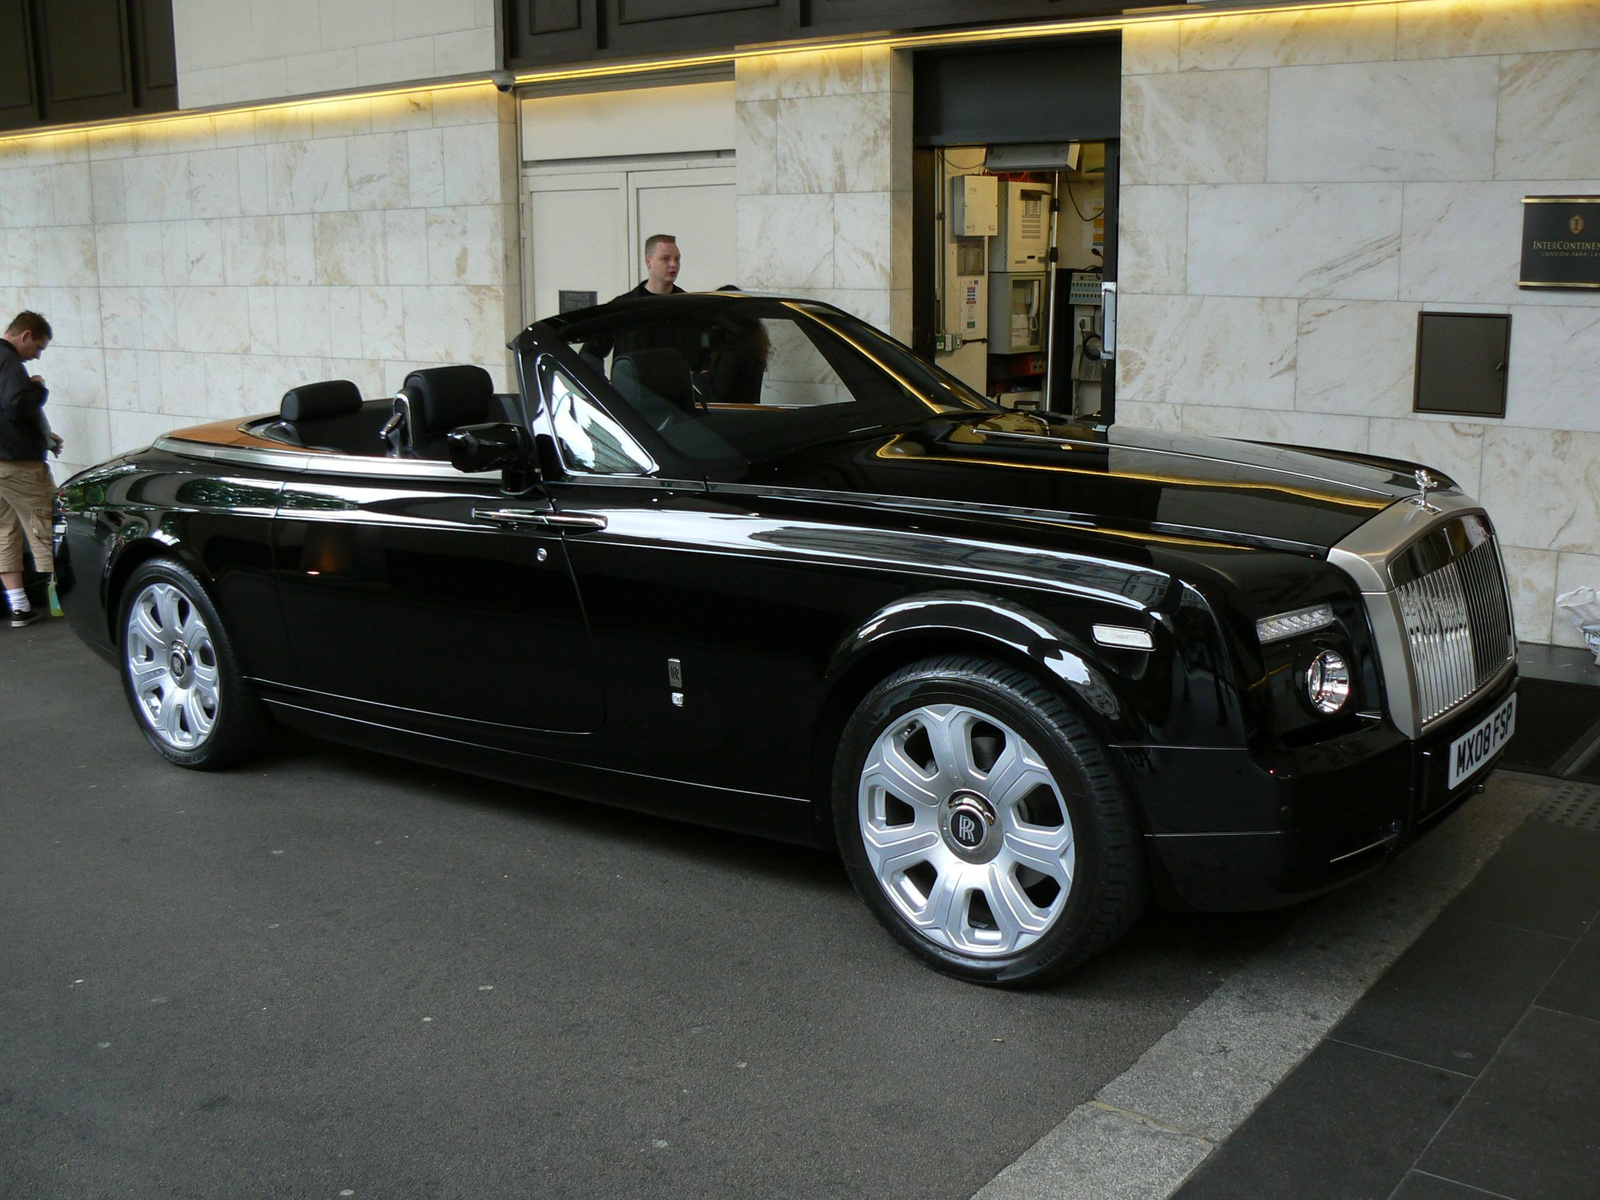 (4) Rolls-Royce Drophead Coupe